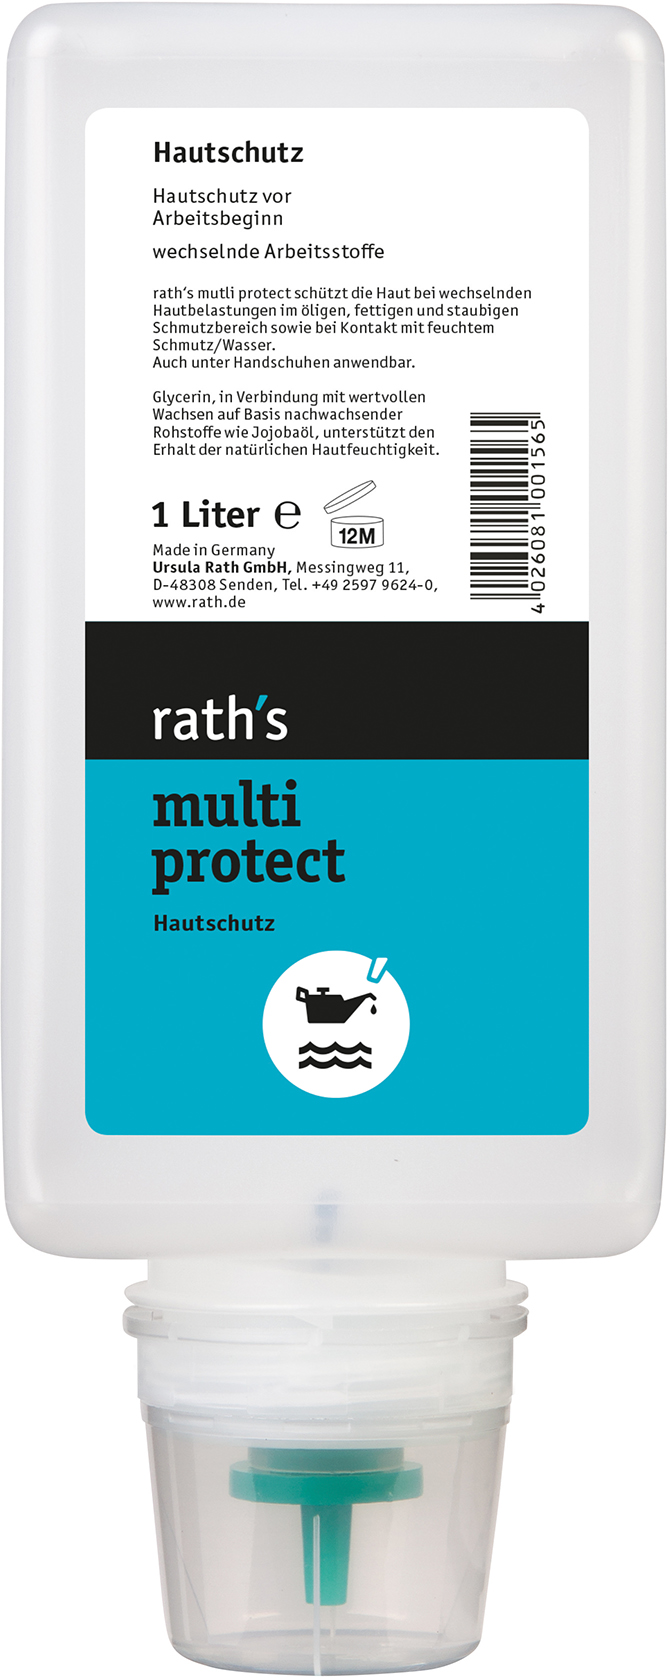 Picture of Raths multi protect Hautschutzlotion 1-Liter-Softflasche